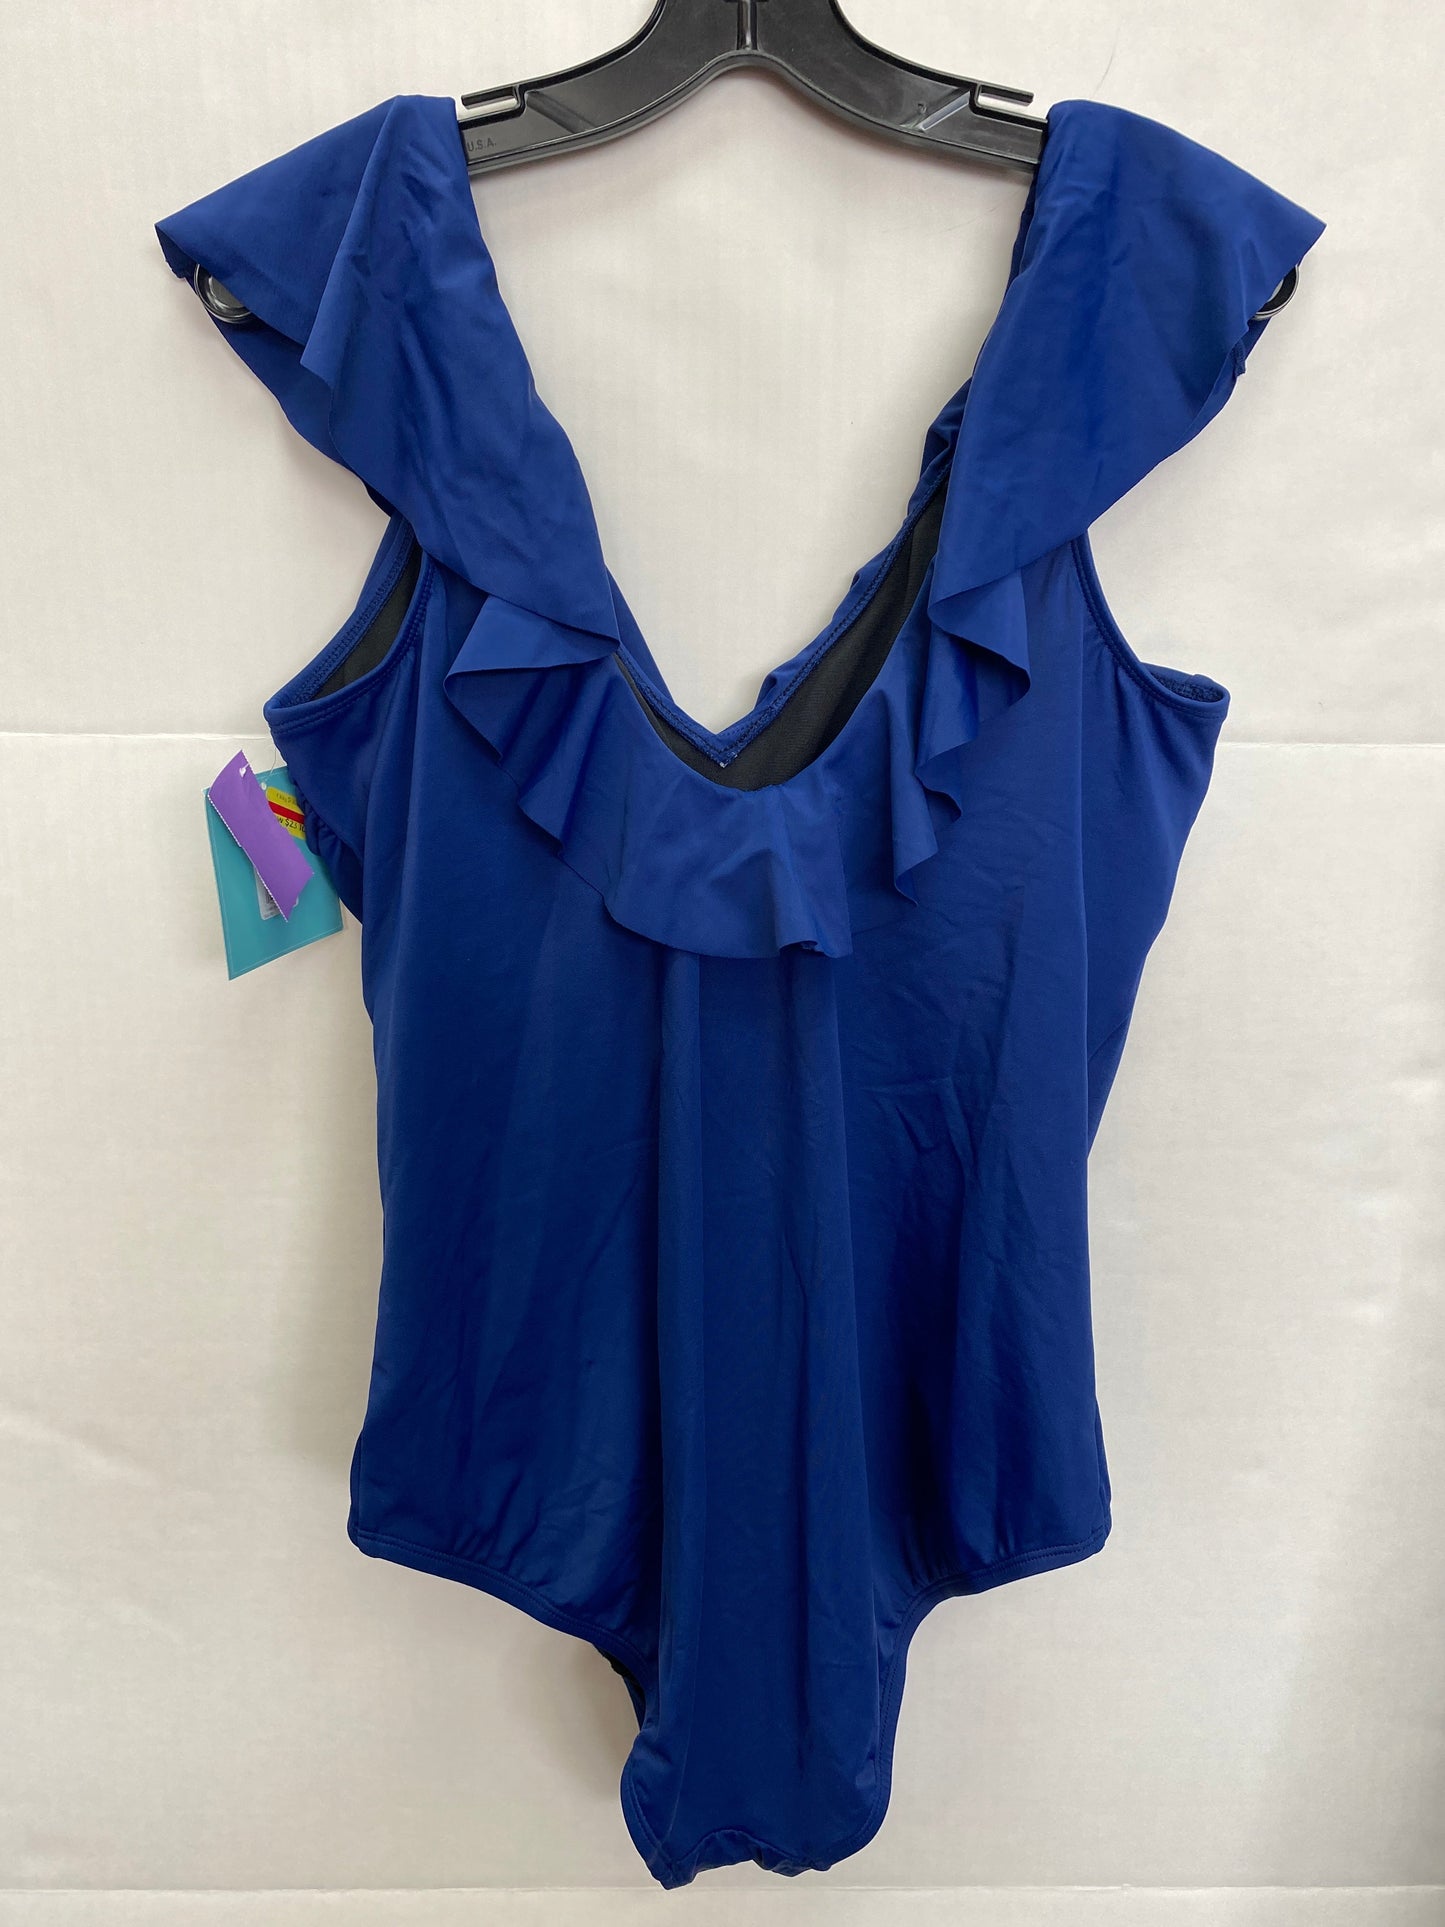 Blue Swimsuit Clothes Mentor, Size 1x